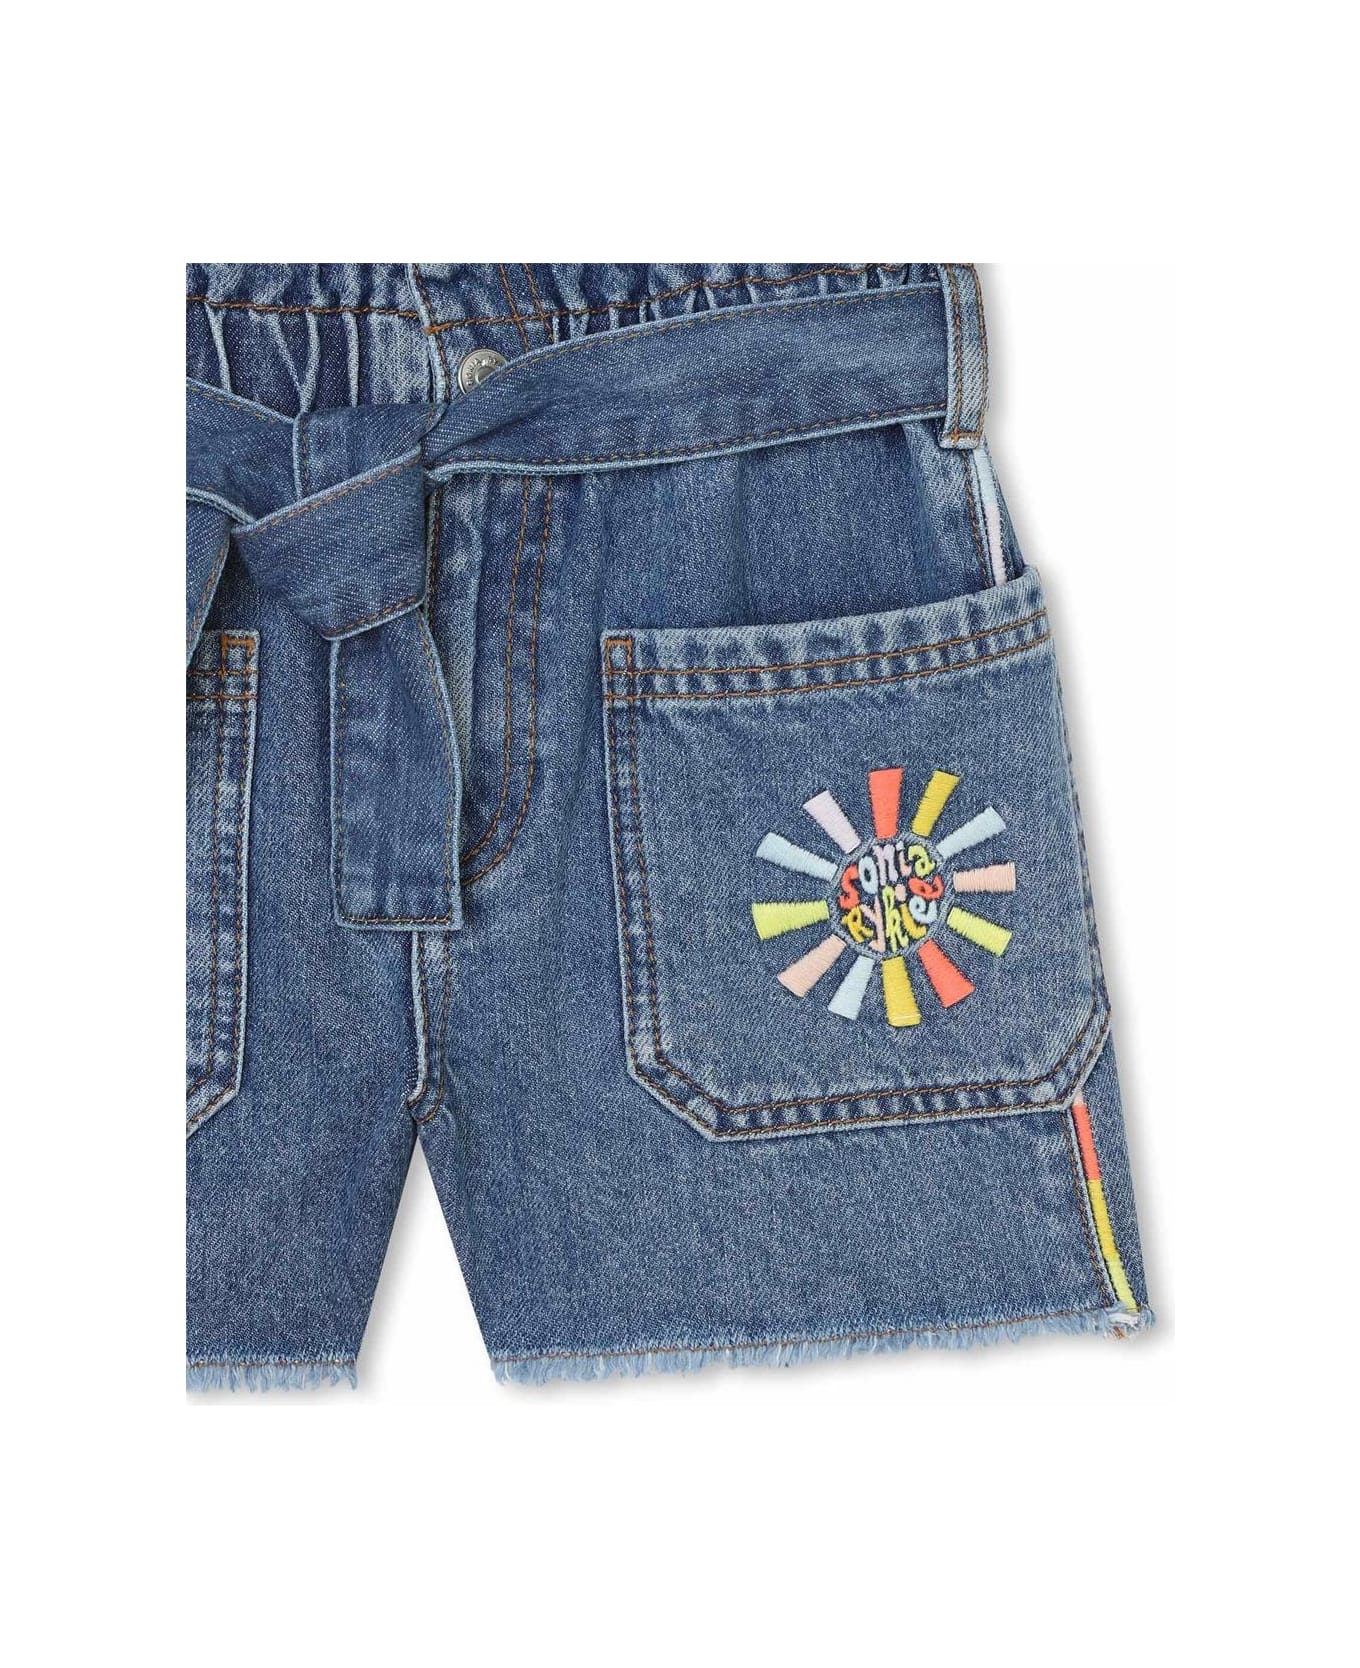 Sonia Rykiel Denim Shorts With Embroidery - Light blue ボトムス